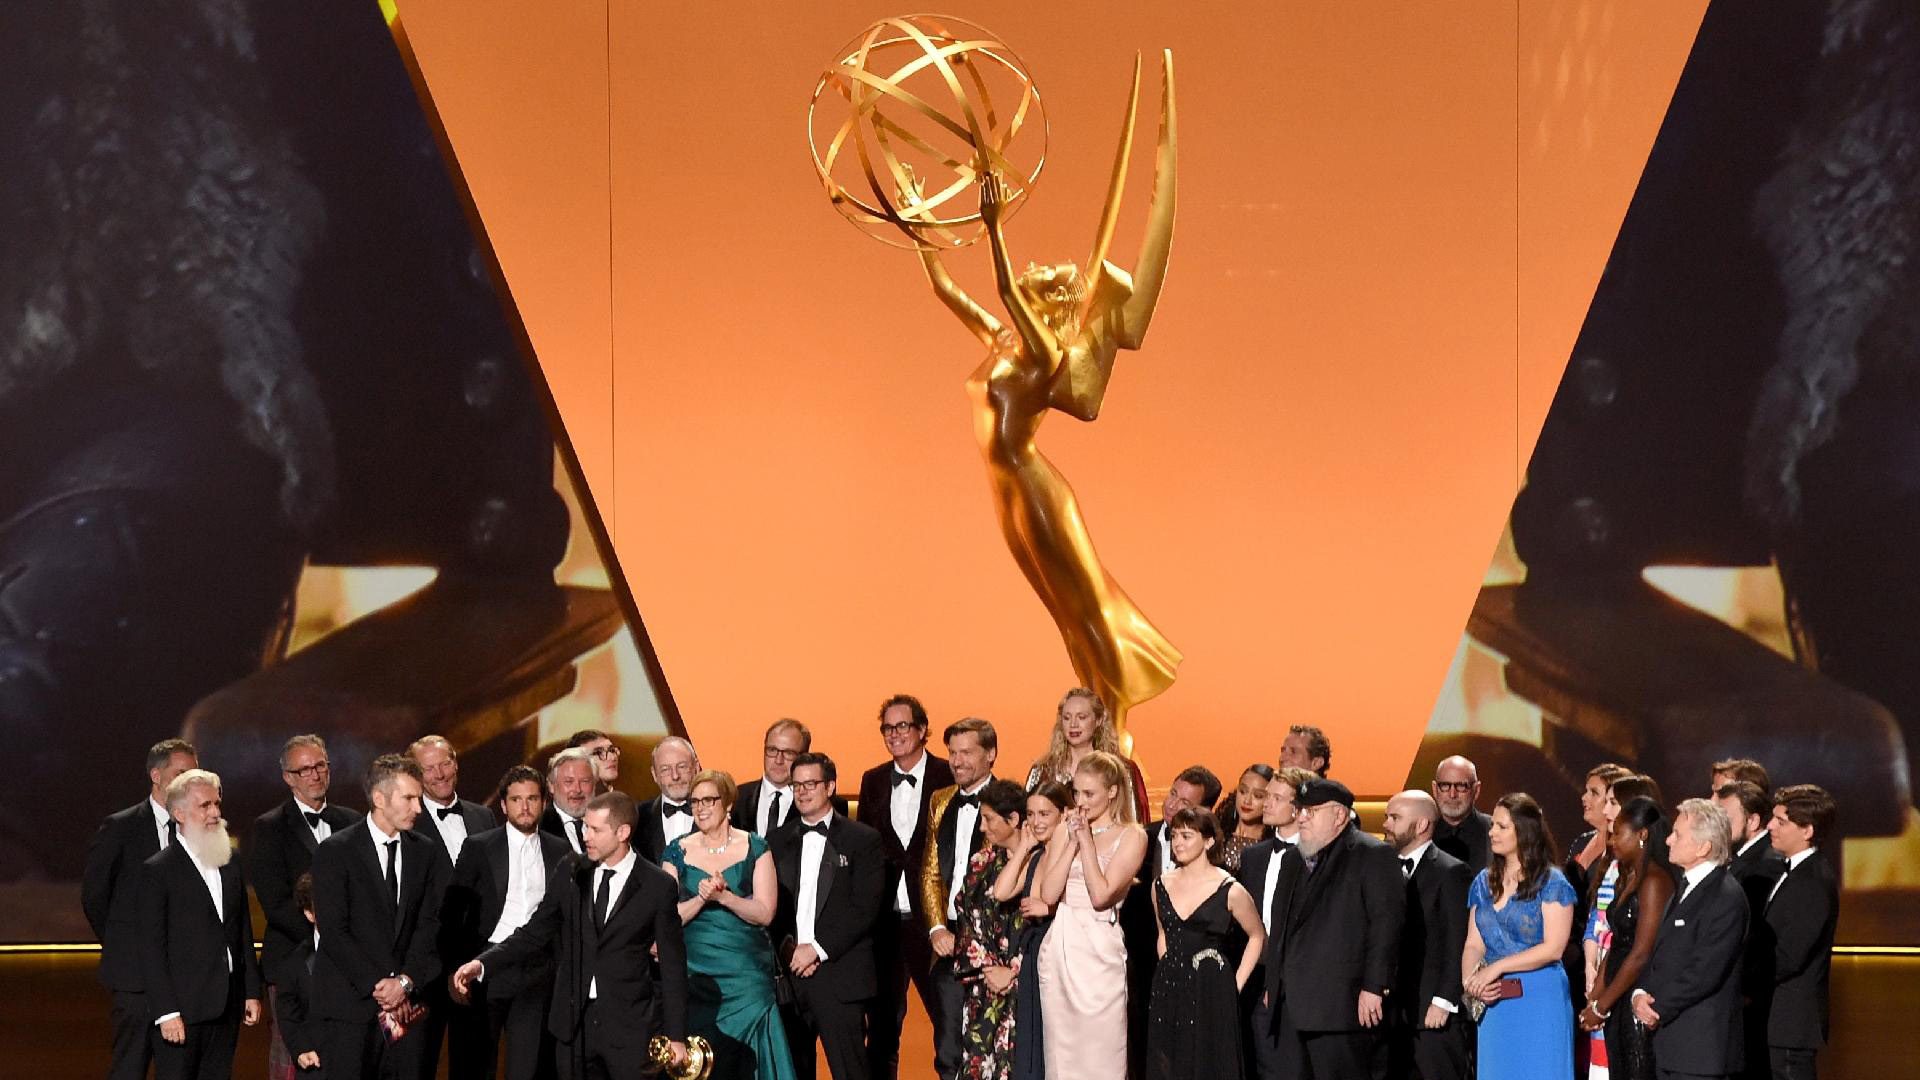 Indicados ao Emmy 2020: Indicados e ignorados do ano